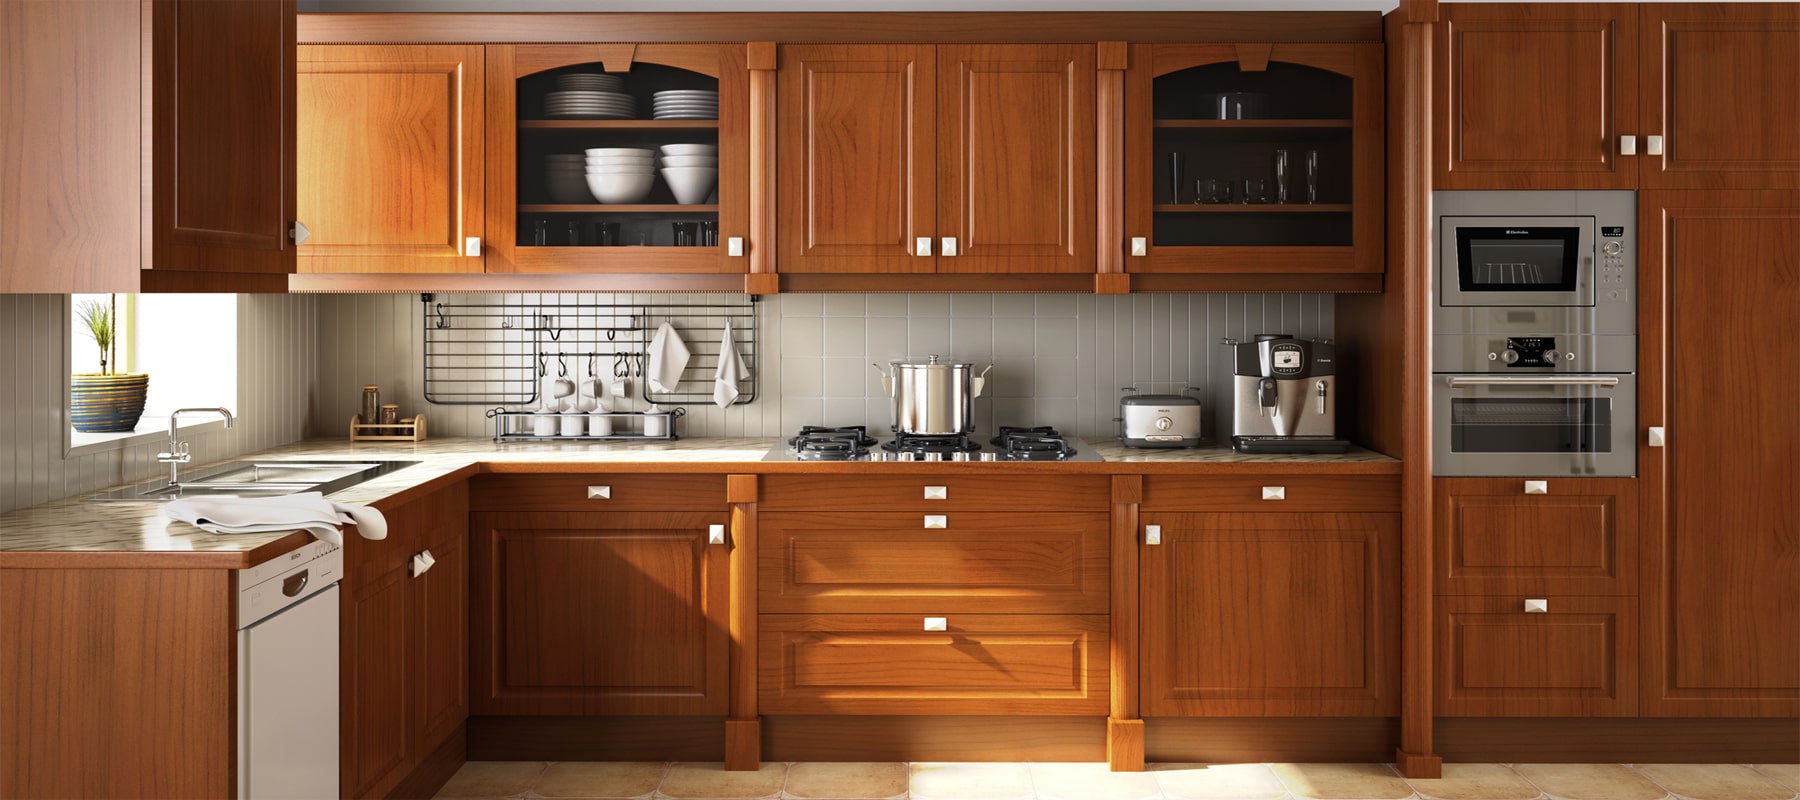 Oak Kitchen Cabinets Cost